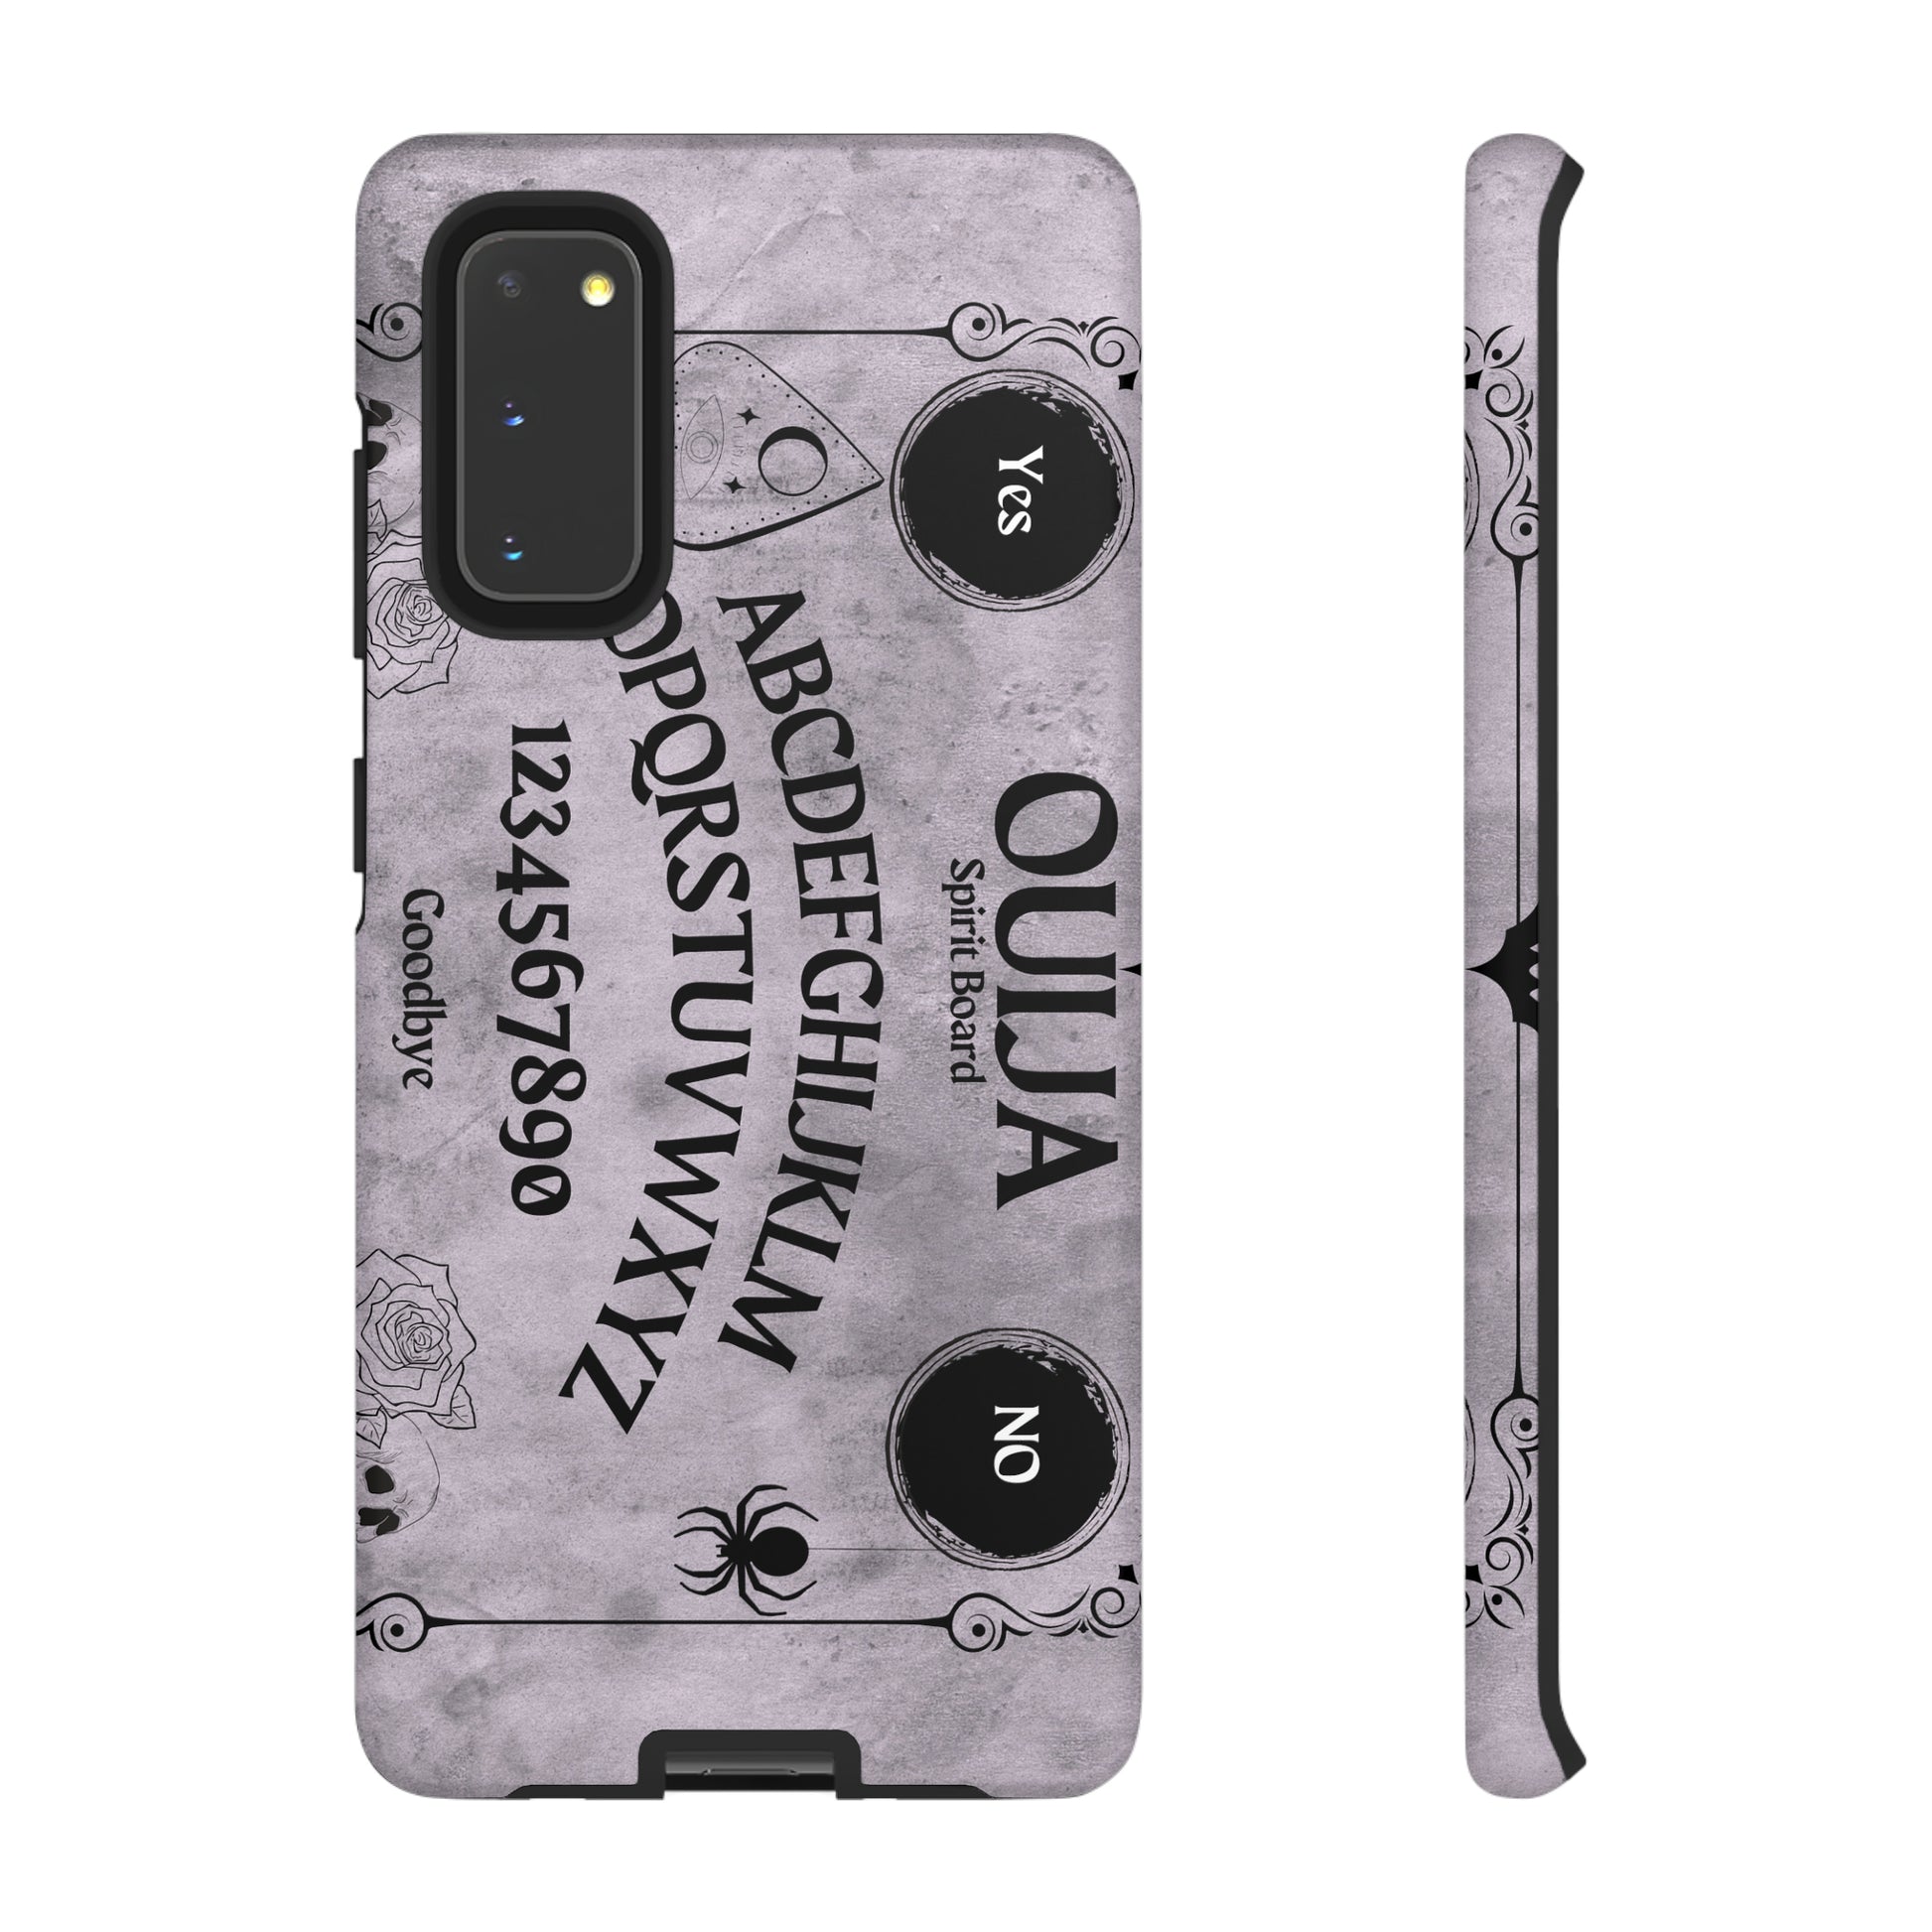 Ouija Board Tough Phone Cases For Samsung iPhone GooglePhone CaseVTZdesignsSamsung Galaxy S20MatteAccessoriesGlossyhalloween